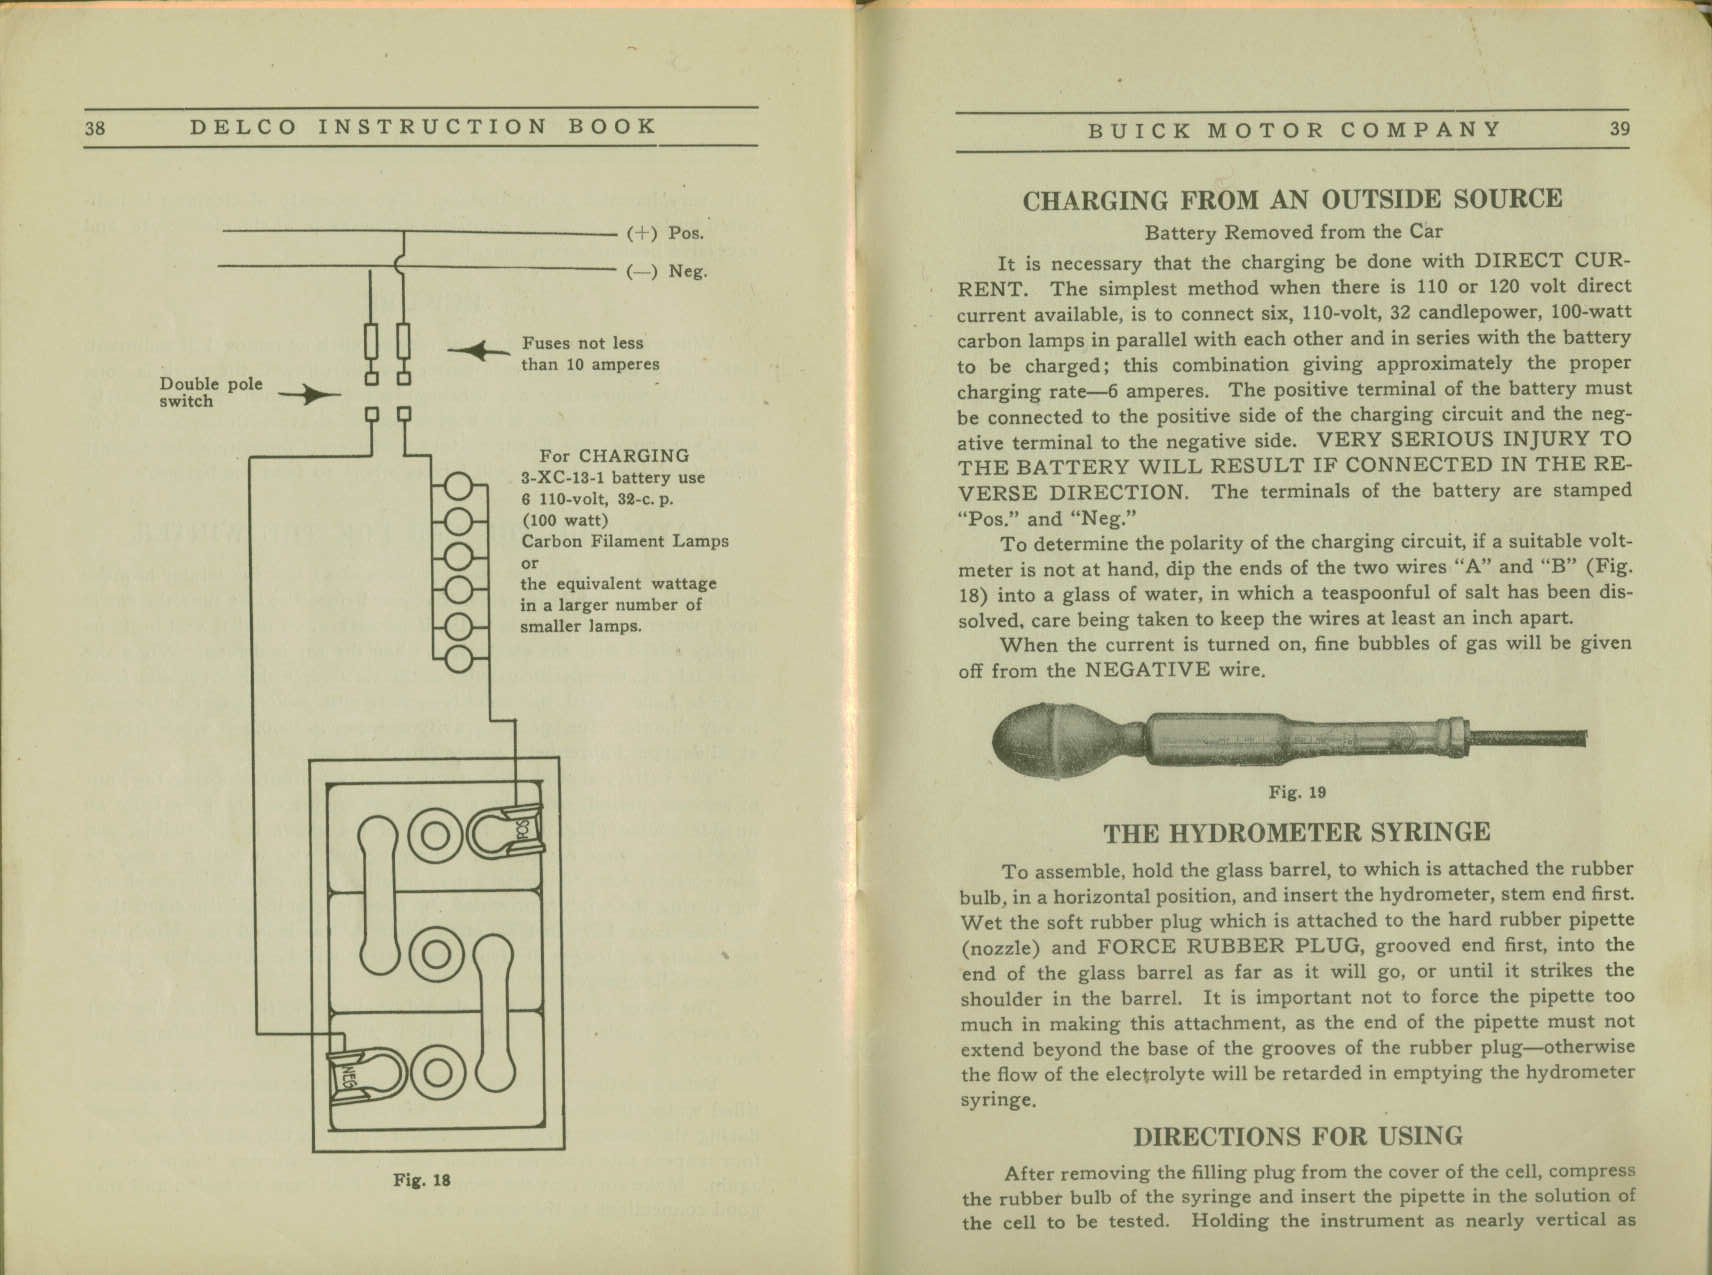 1916 Buick Delco Instruction Book-38-39